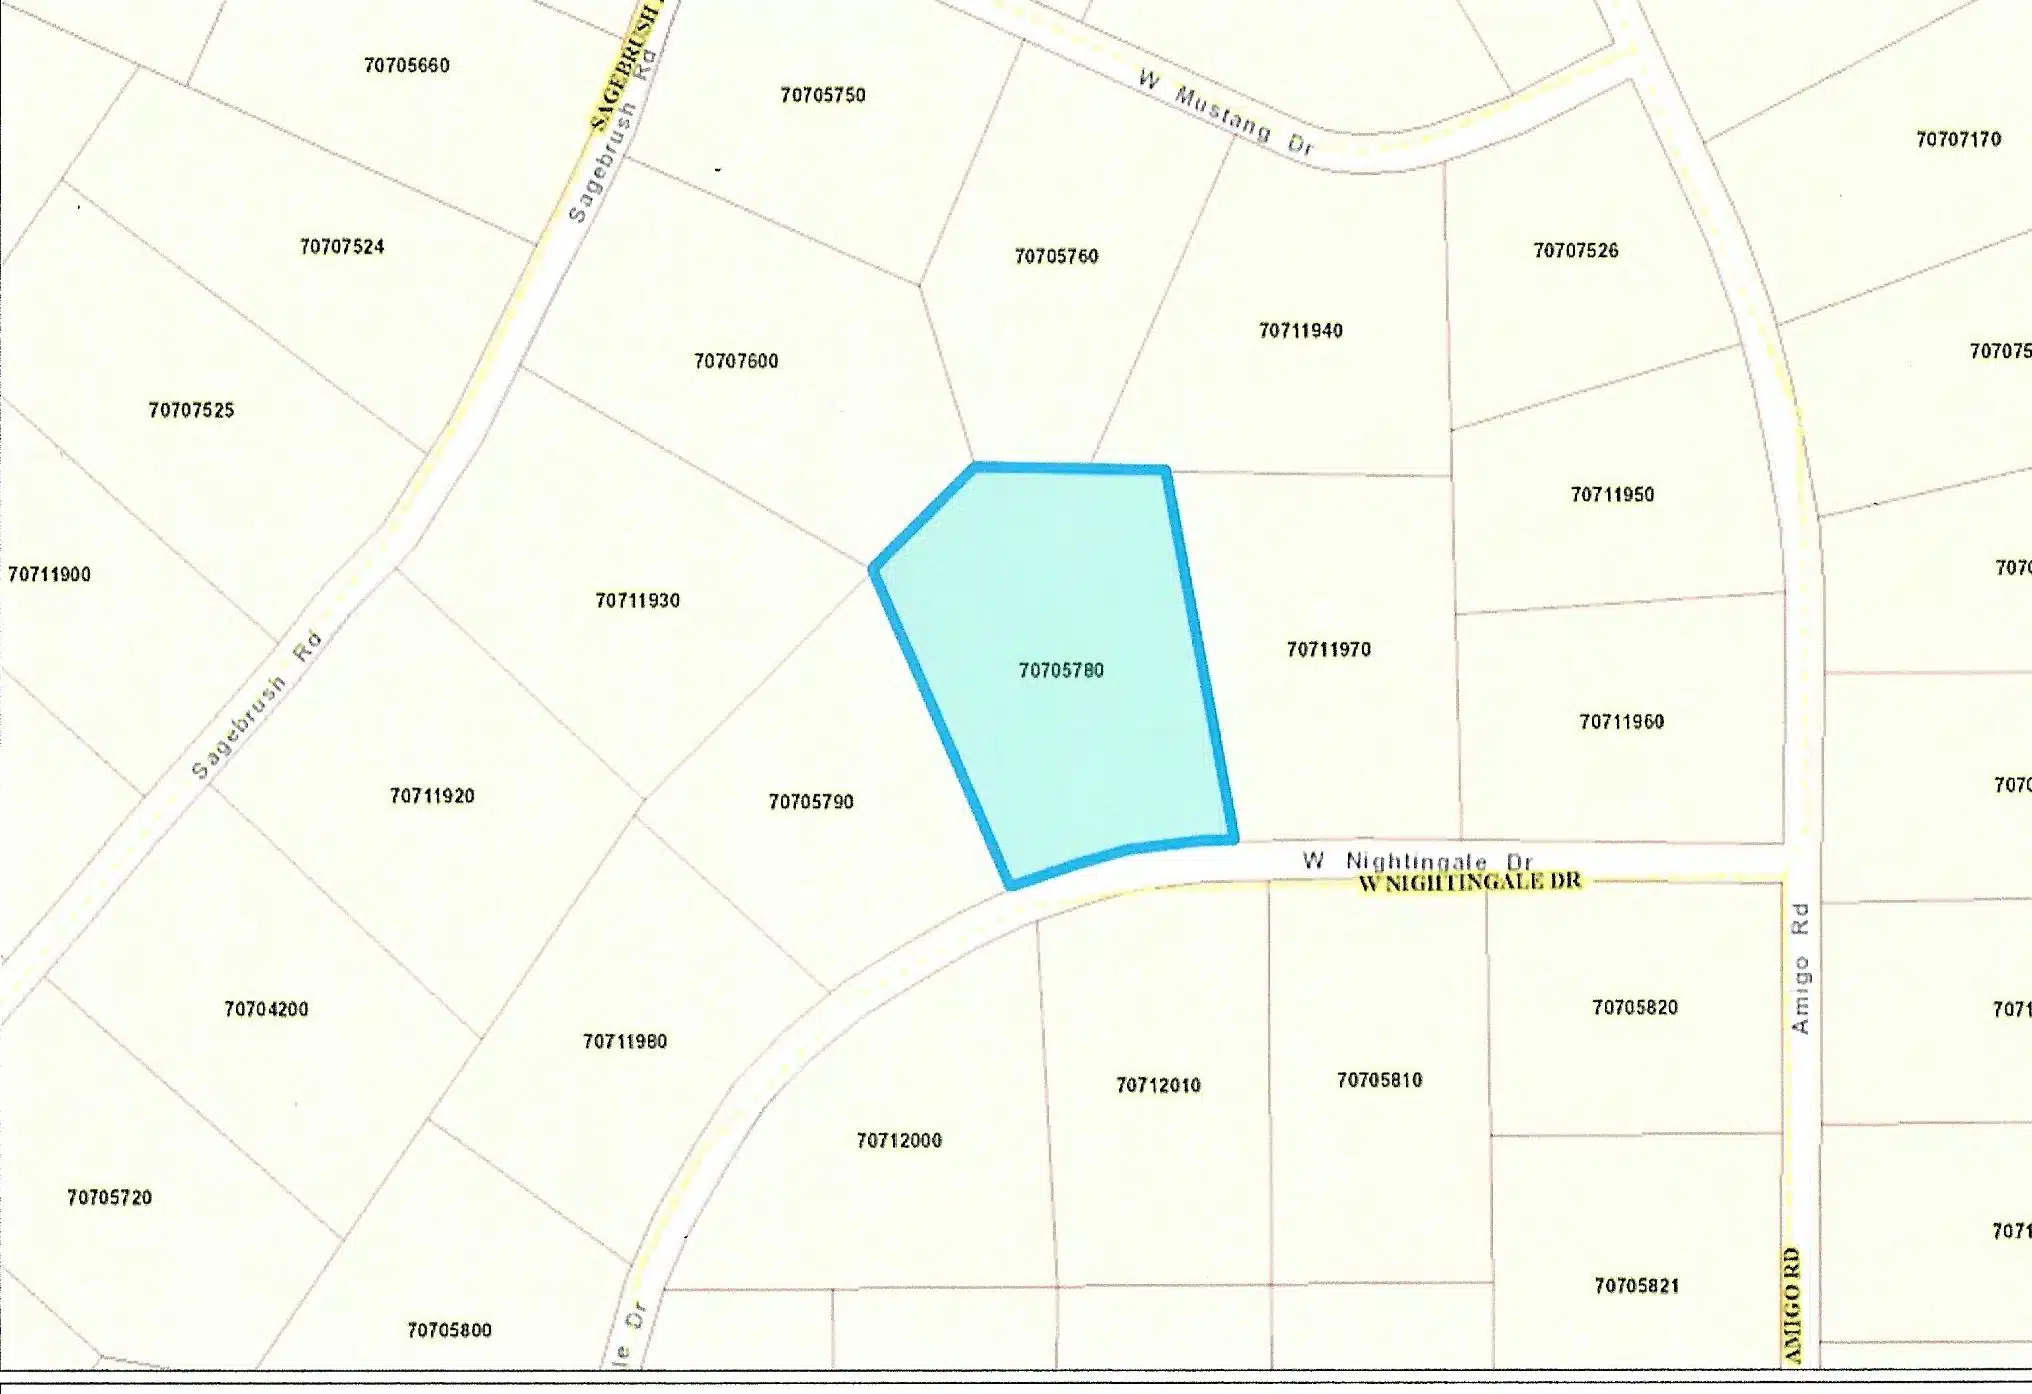 5-Acres-SLNE-W-Nightingale-Drive-Lot-14-Tax-Map-Scan